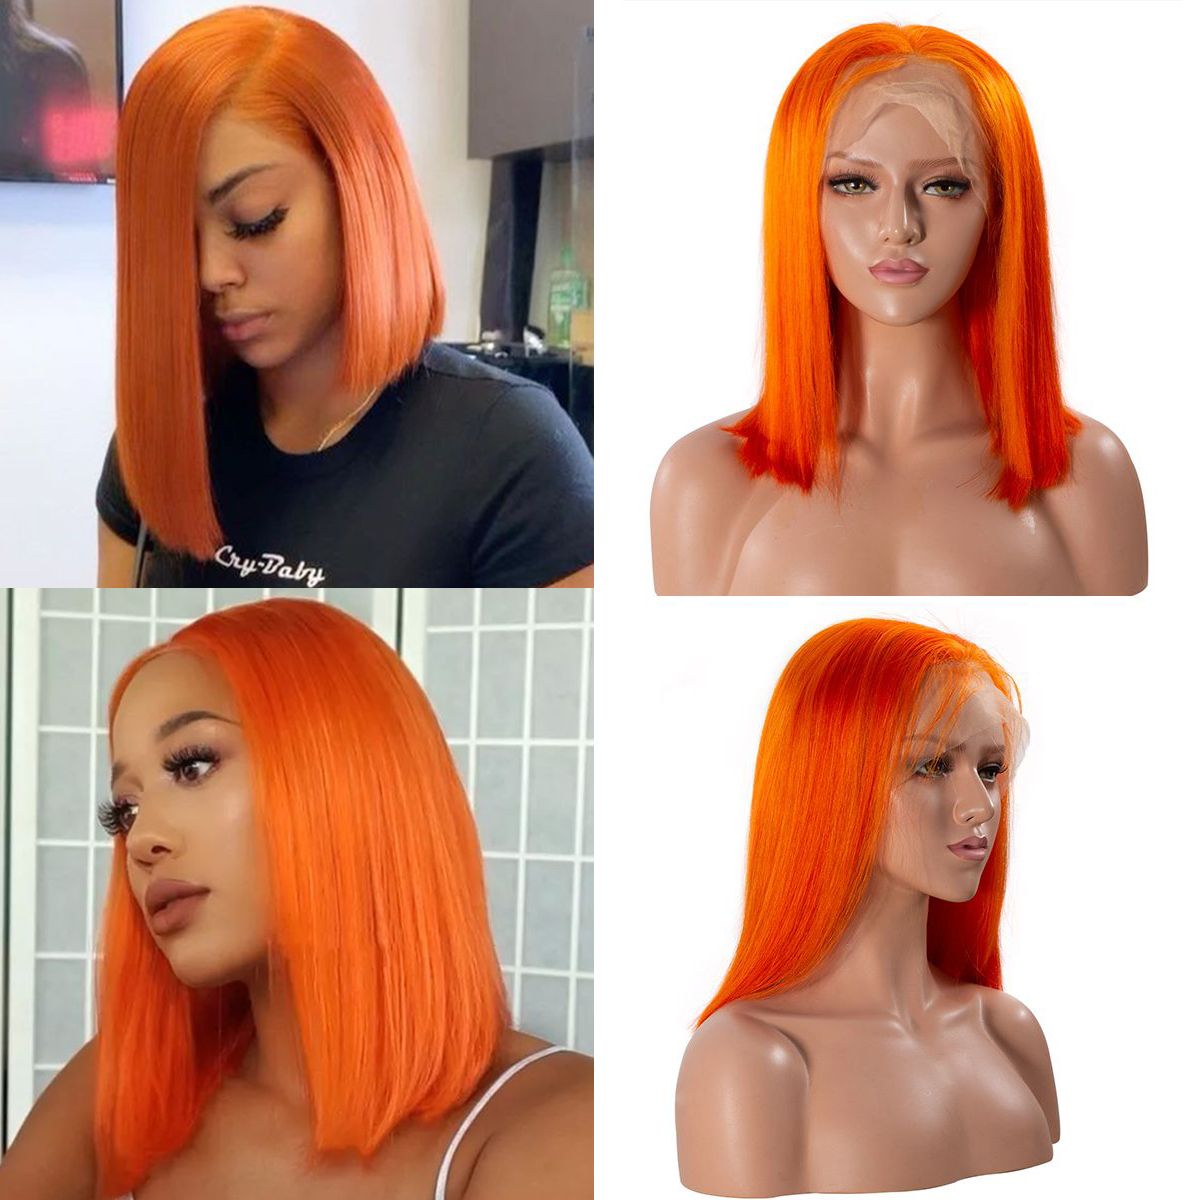 XBL Hair 13x6 Ginger Orange Short Bob Wig Human Hair Lace Front Wig